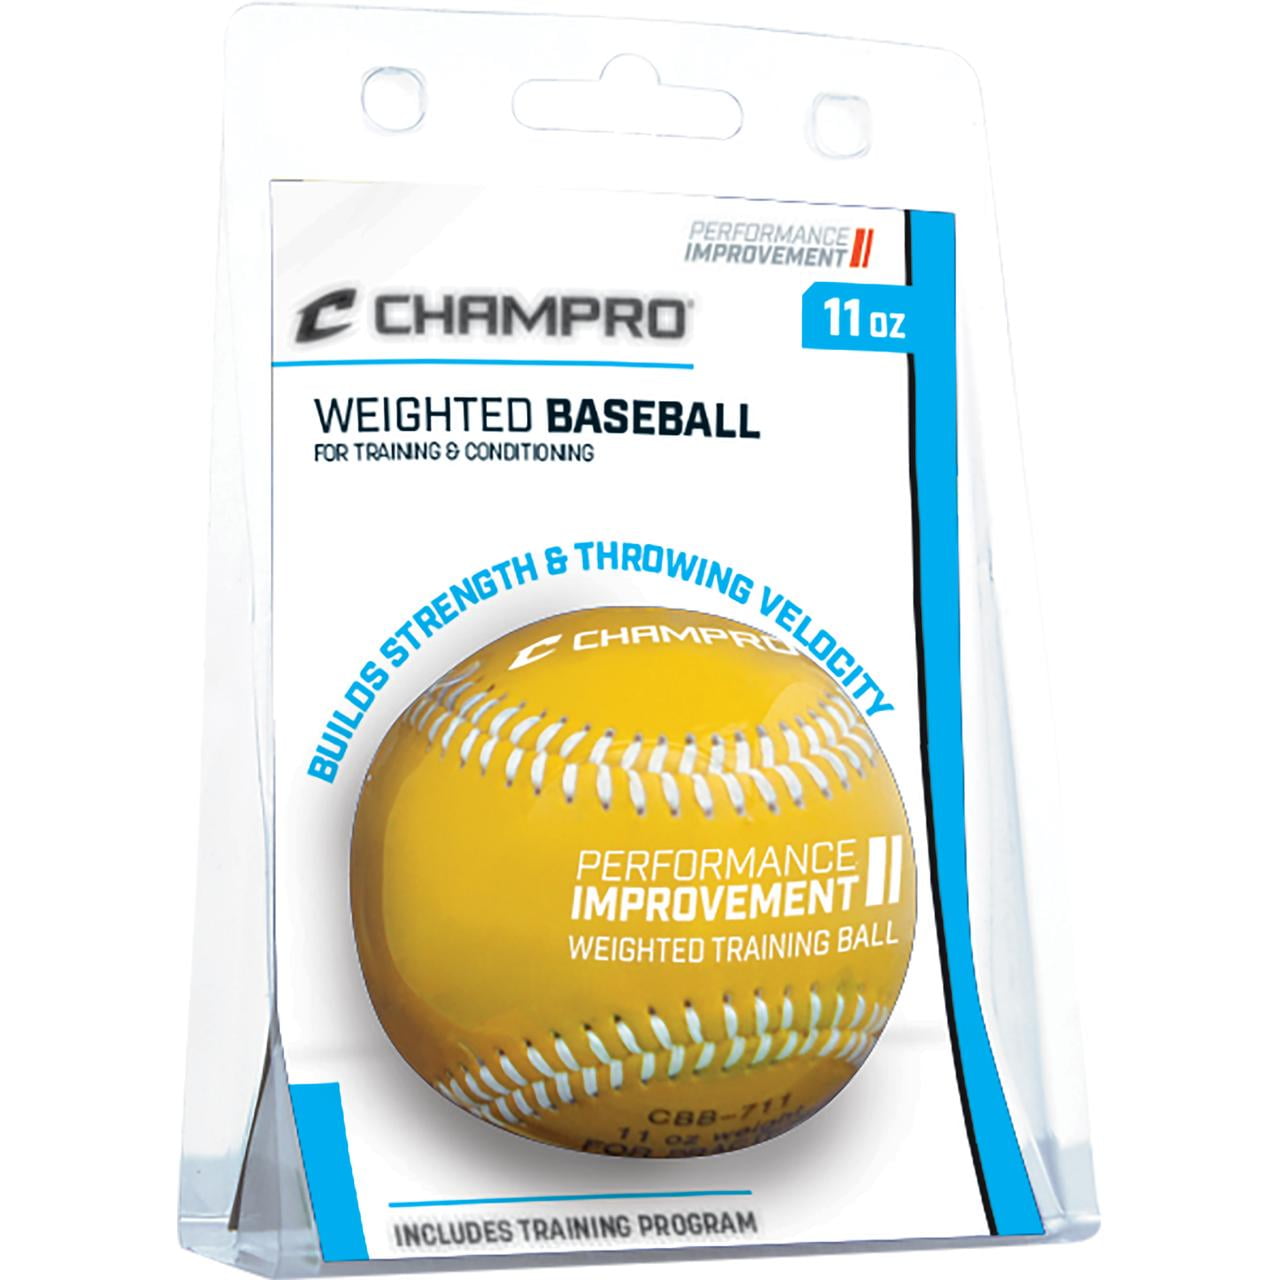 Champro Weighted Training Baseball 11 oz 